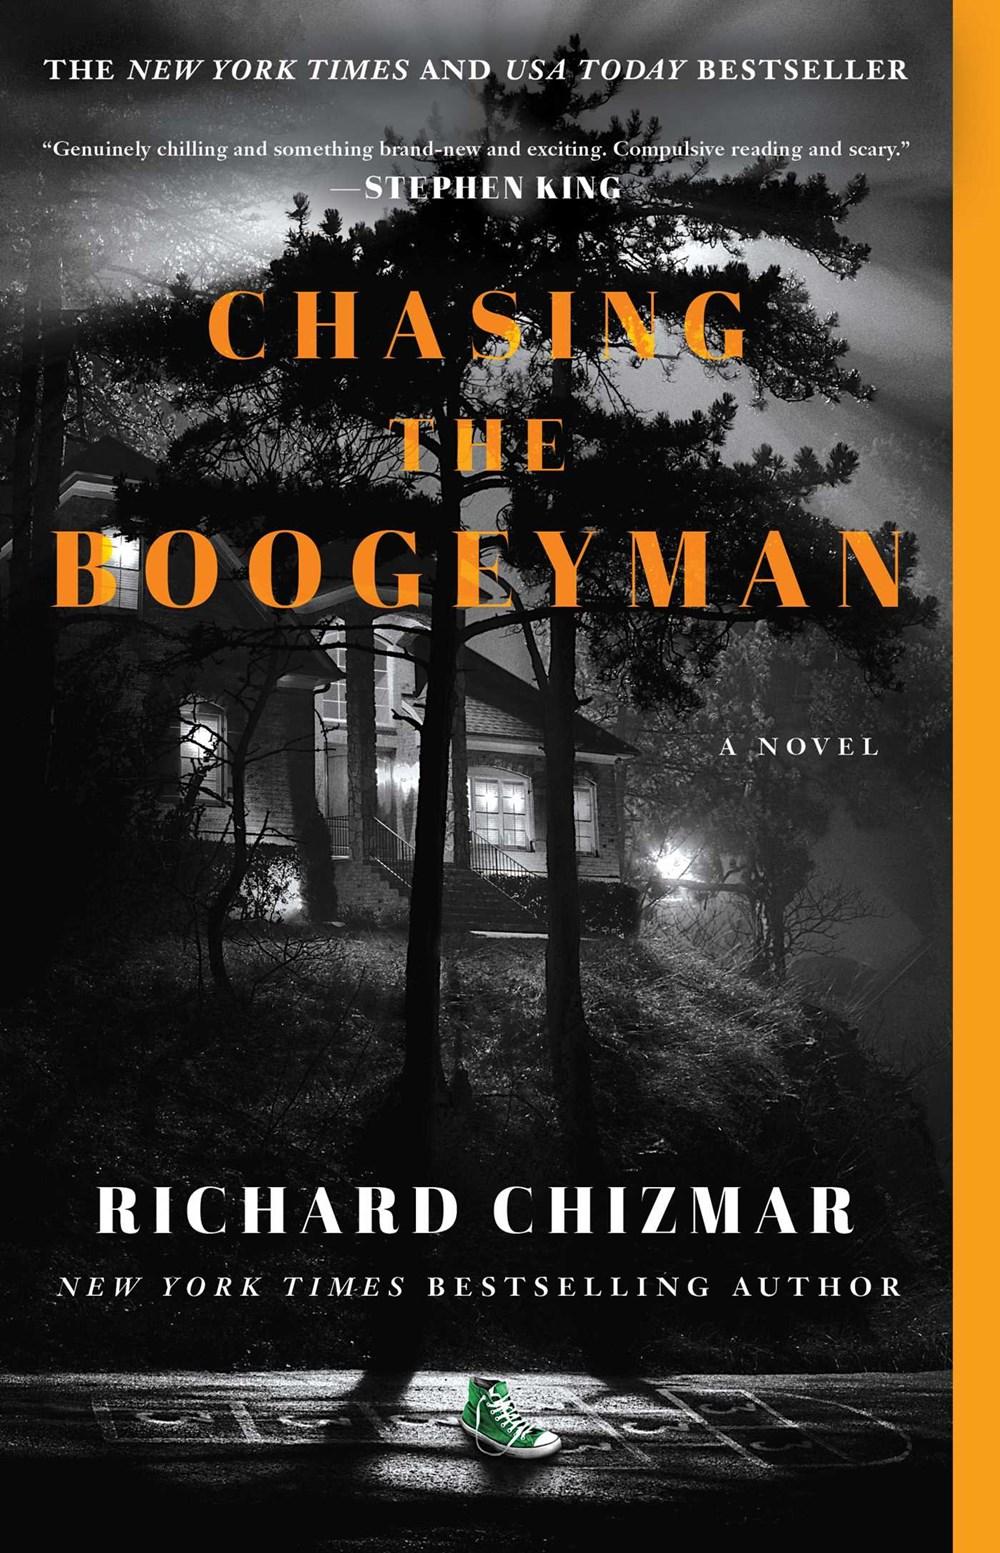 Chasing the Boogeyman image